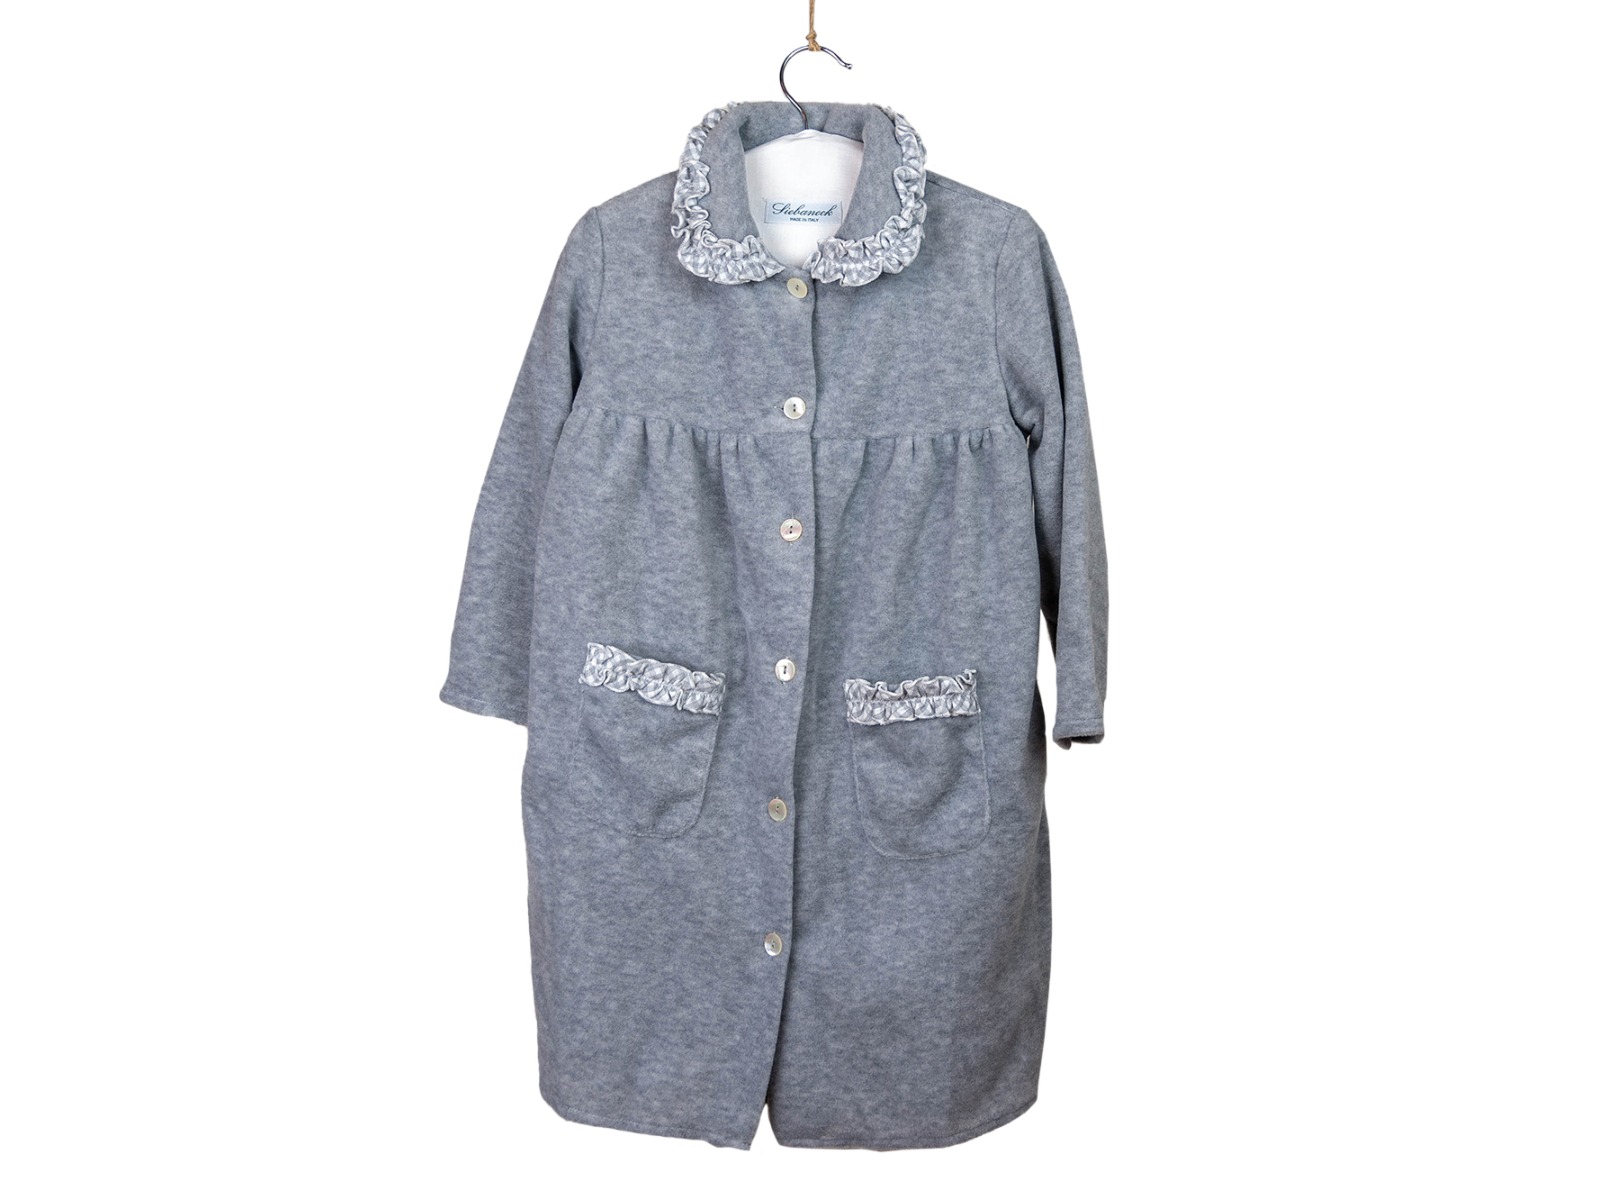 Siebaneck, i pigiami artigianali italiani: - bambina - mod. 27 grigio quadretti bianchi grigi